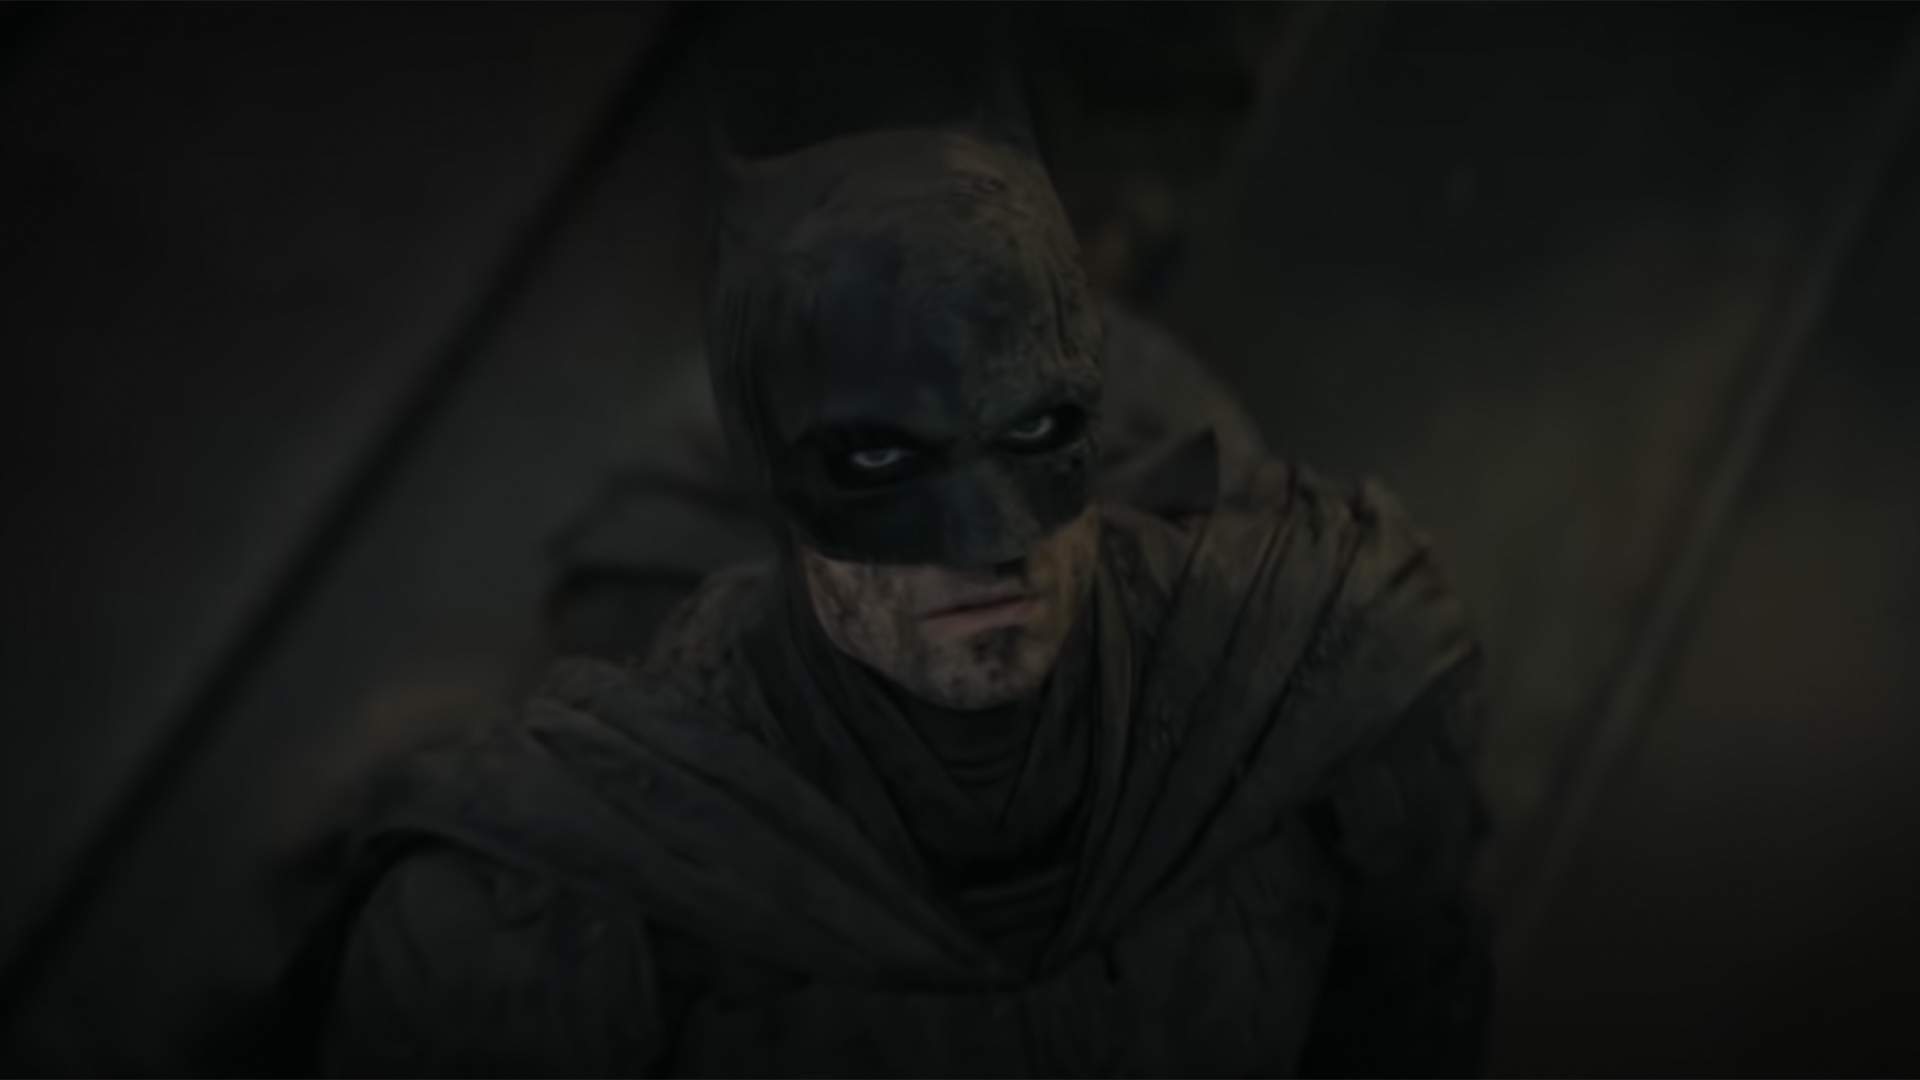 Robert Pattinson Transforms Into the Dark Knight in the Grim and Violent Full Trailer for 'The Batman'